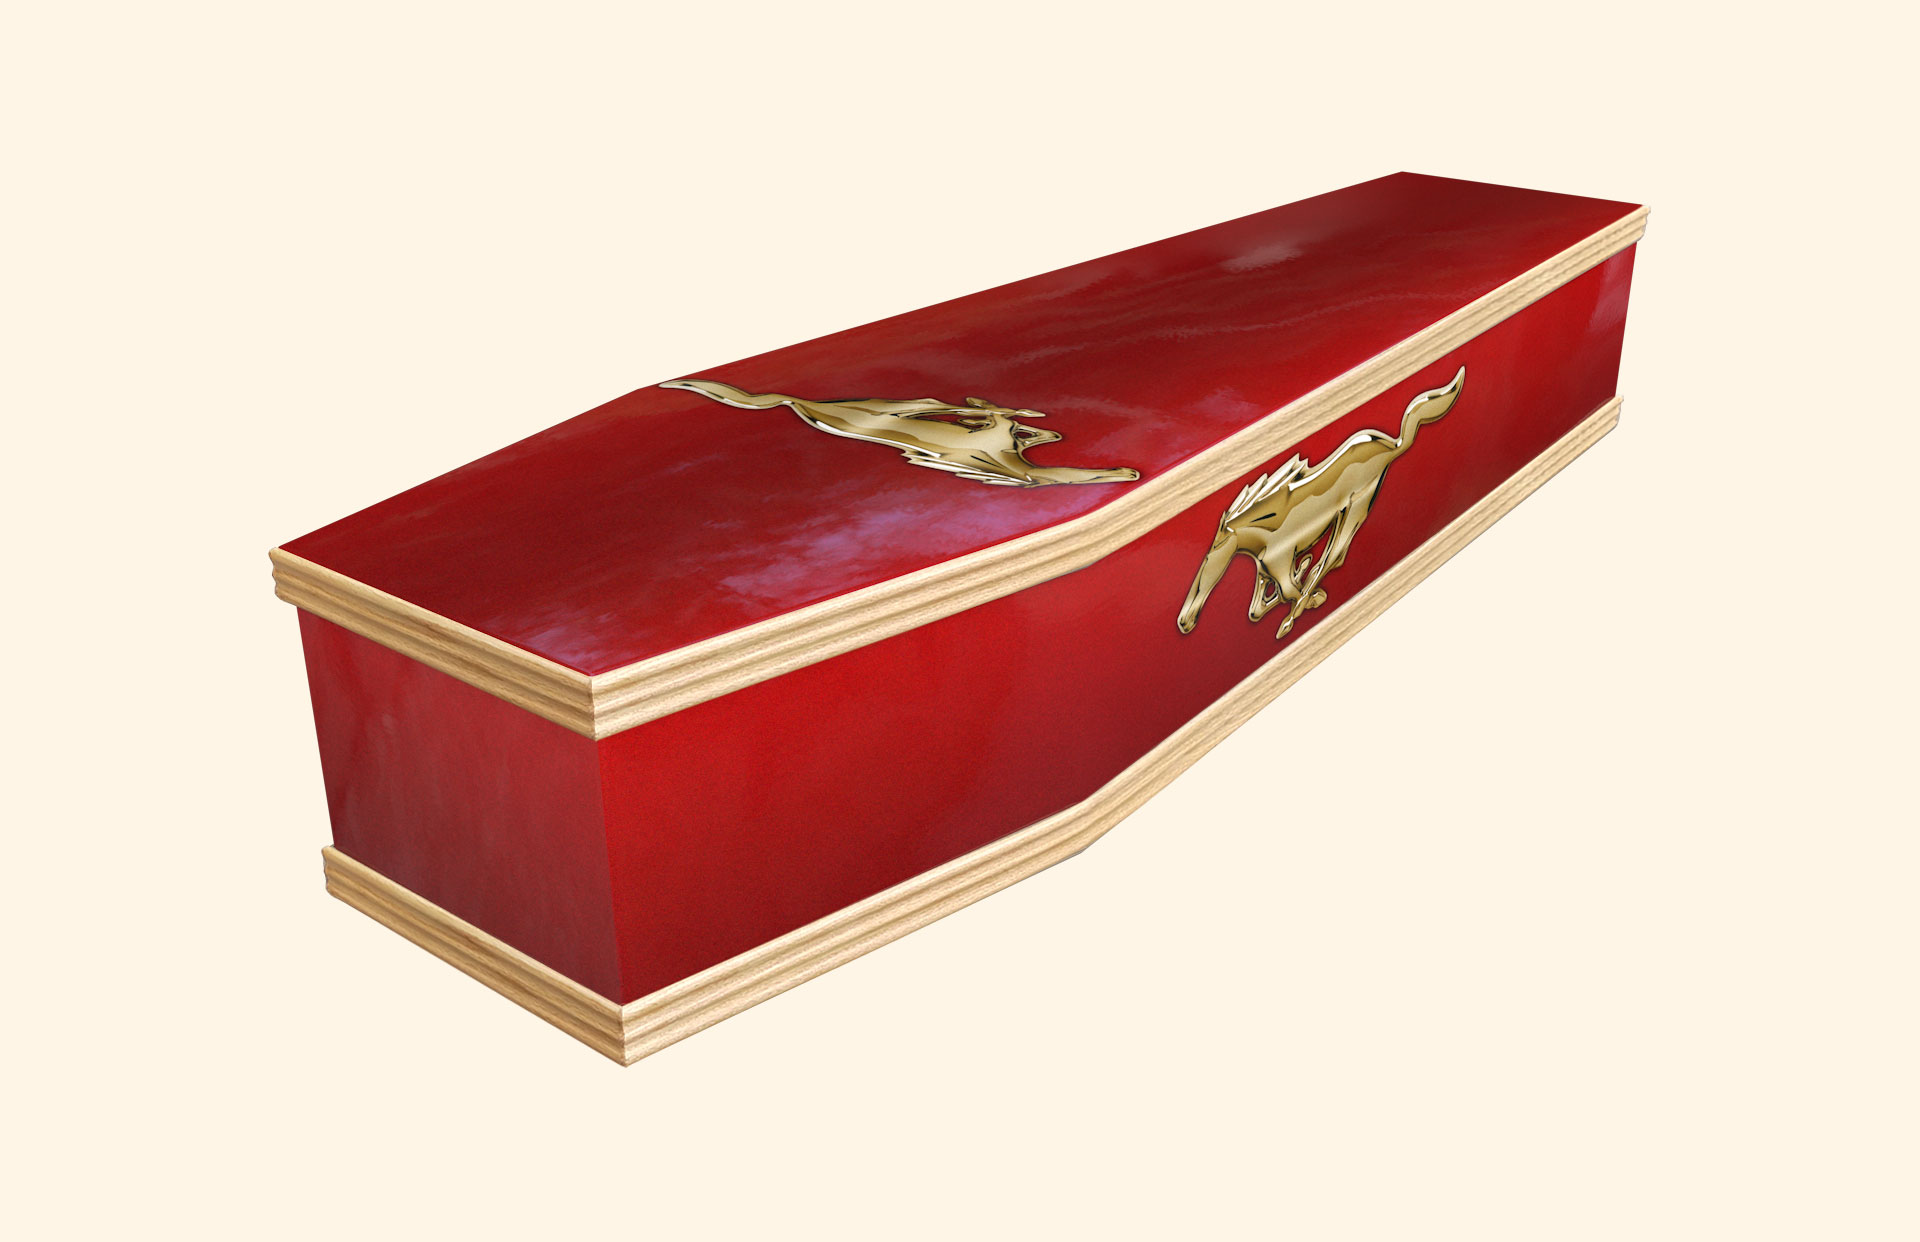 Golden Stallion design on a classic coffin